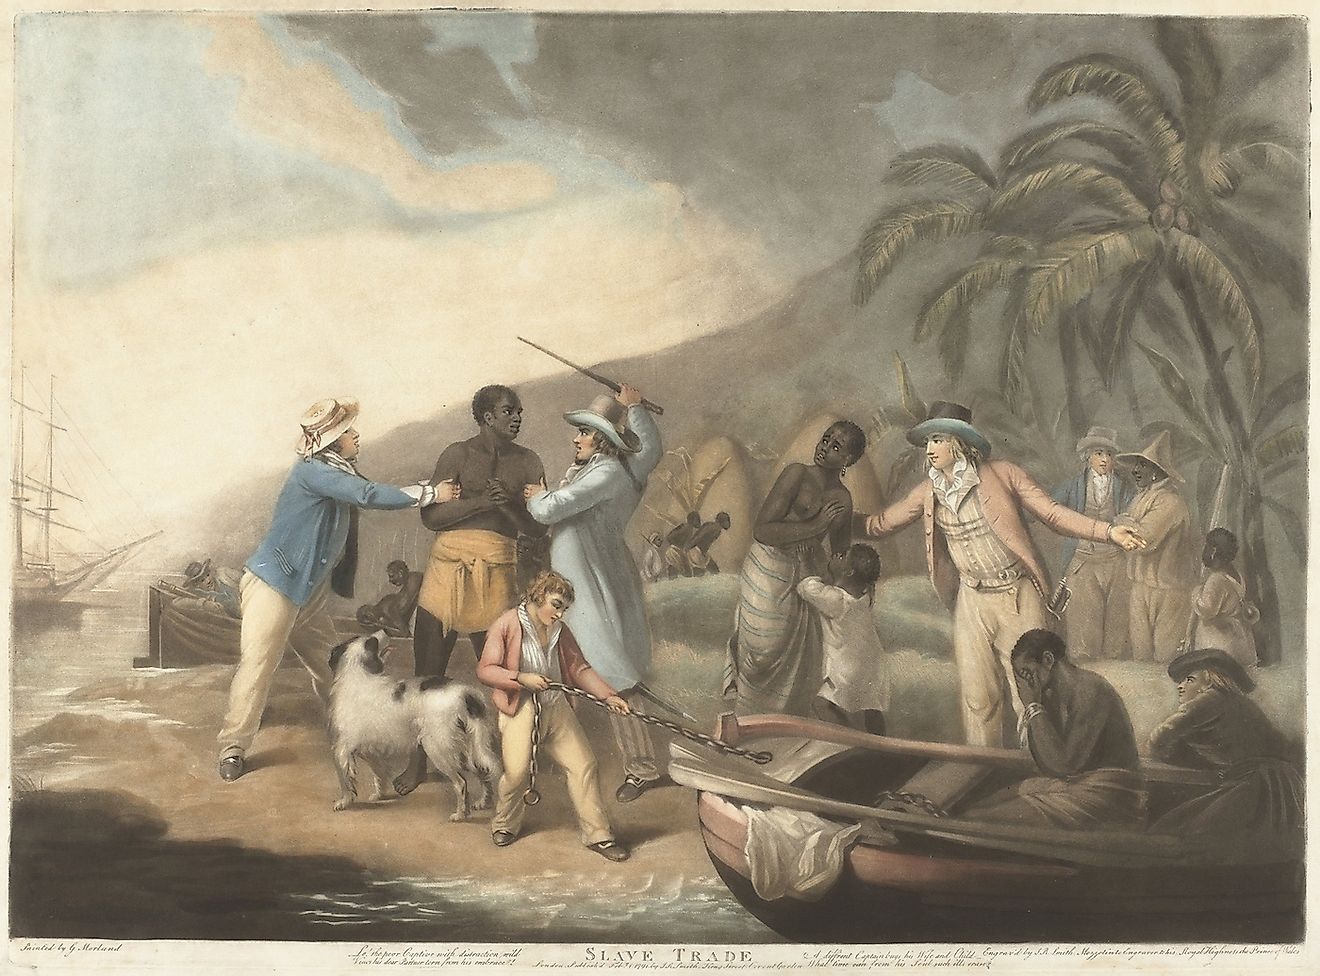 Slave Trade, by John Raphael Smit. Image credit: Everett - Art/Shutterstock.com